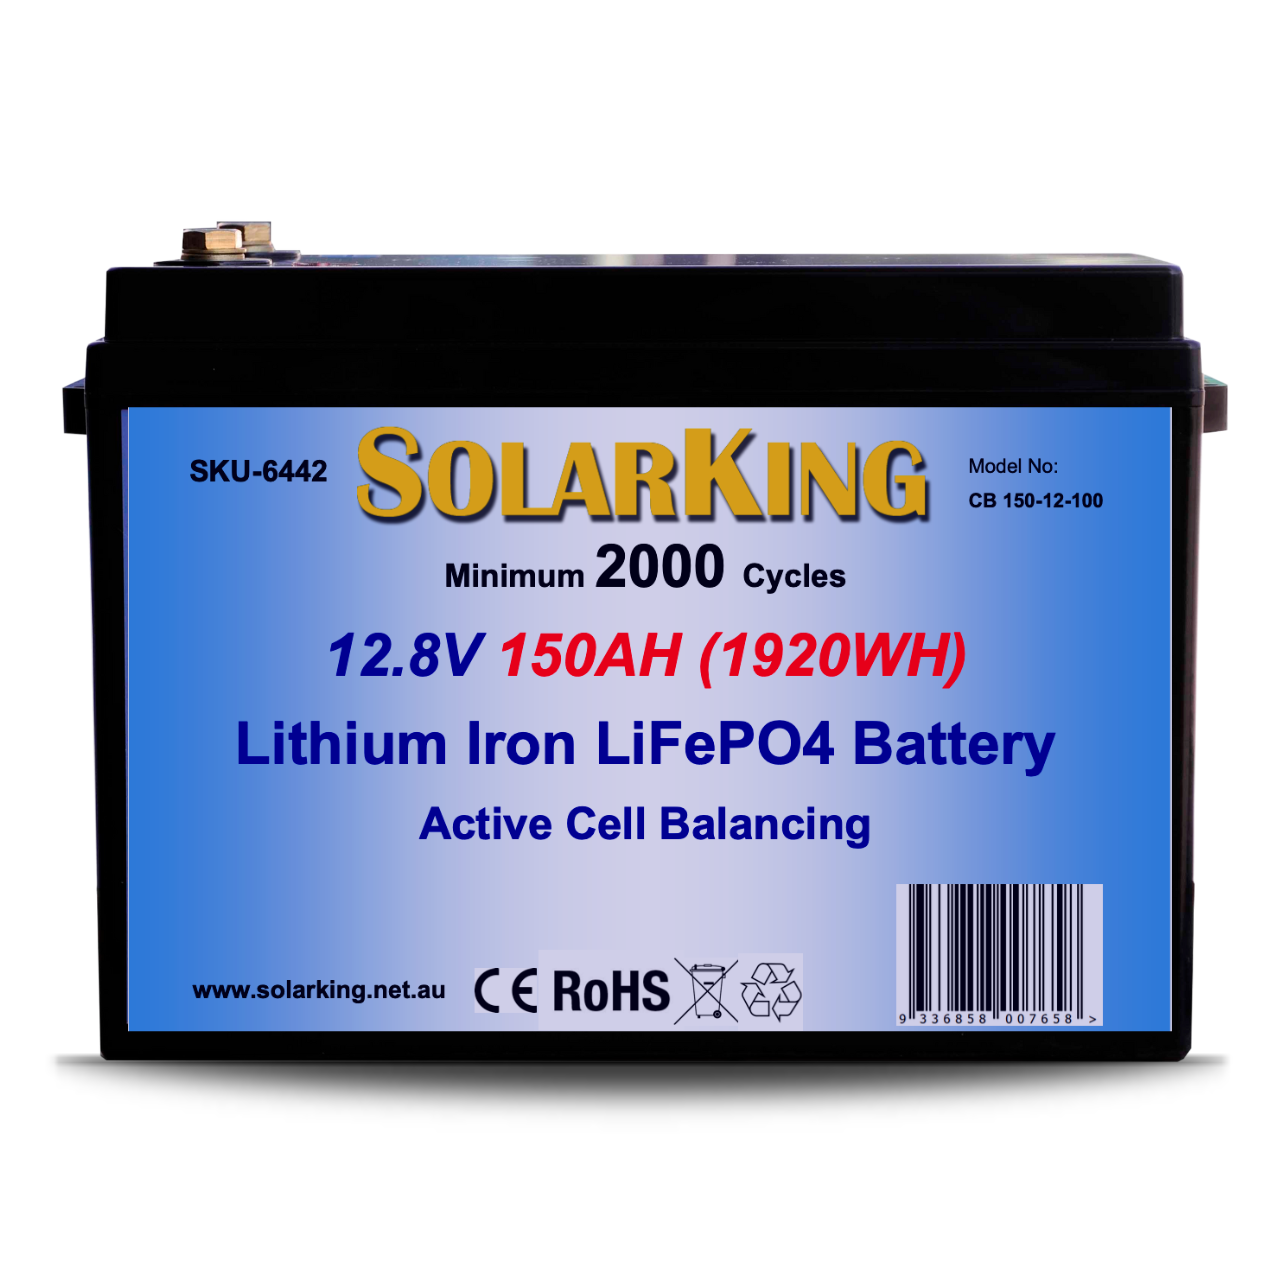 150AH Lithium LiFe PO4 SolarKing Battery CB-150-12-100